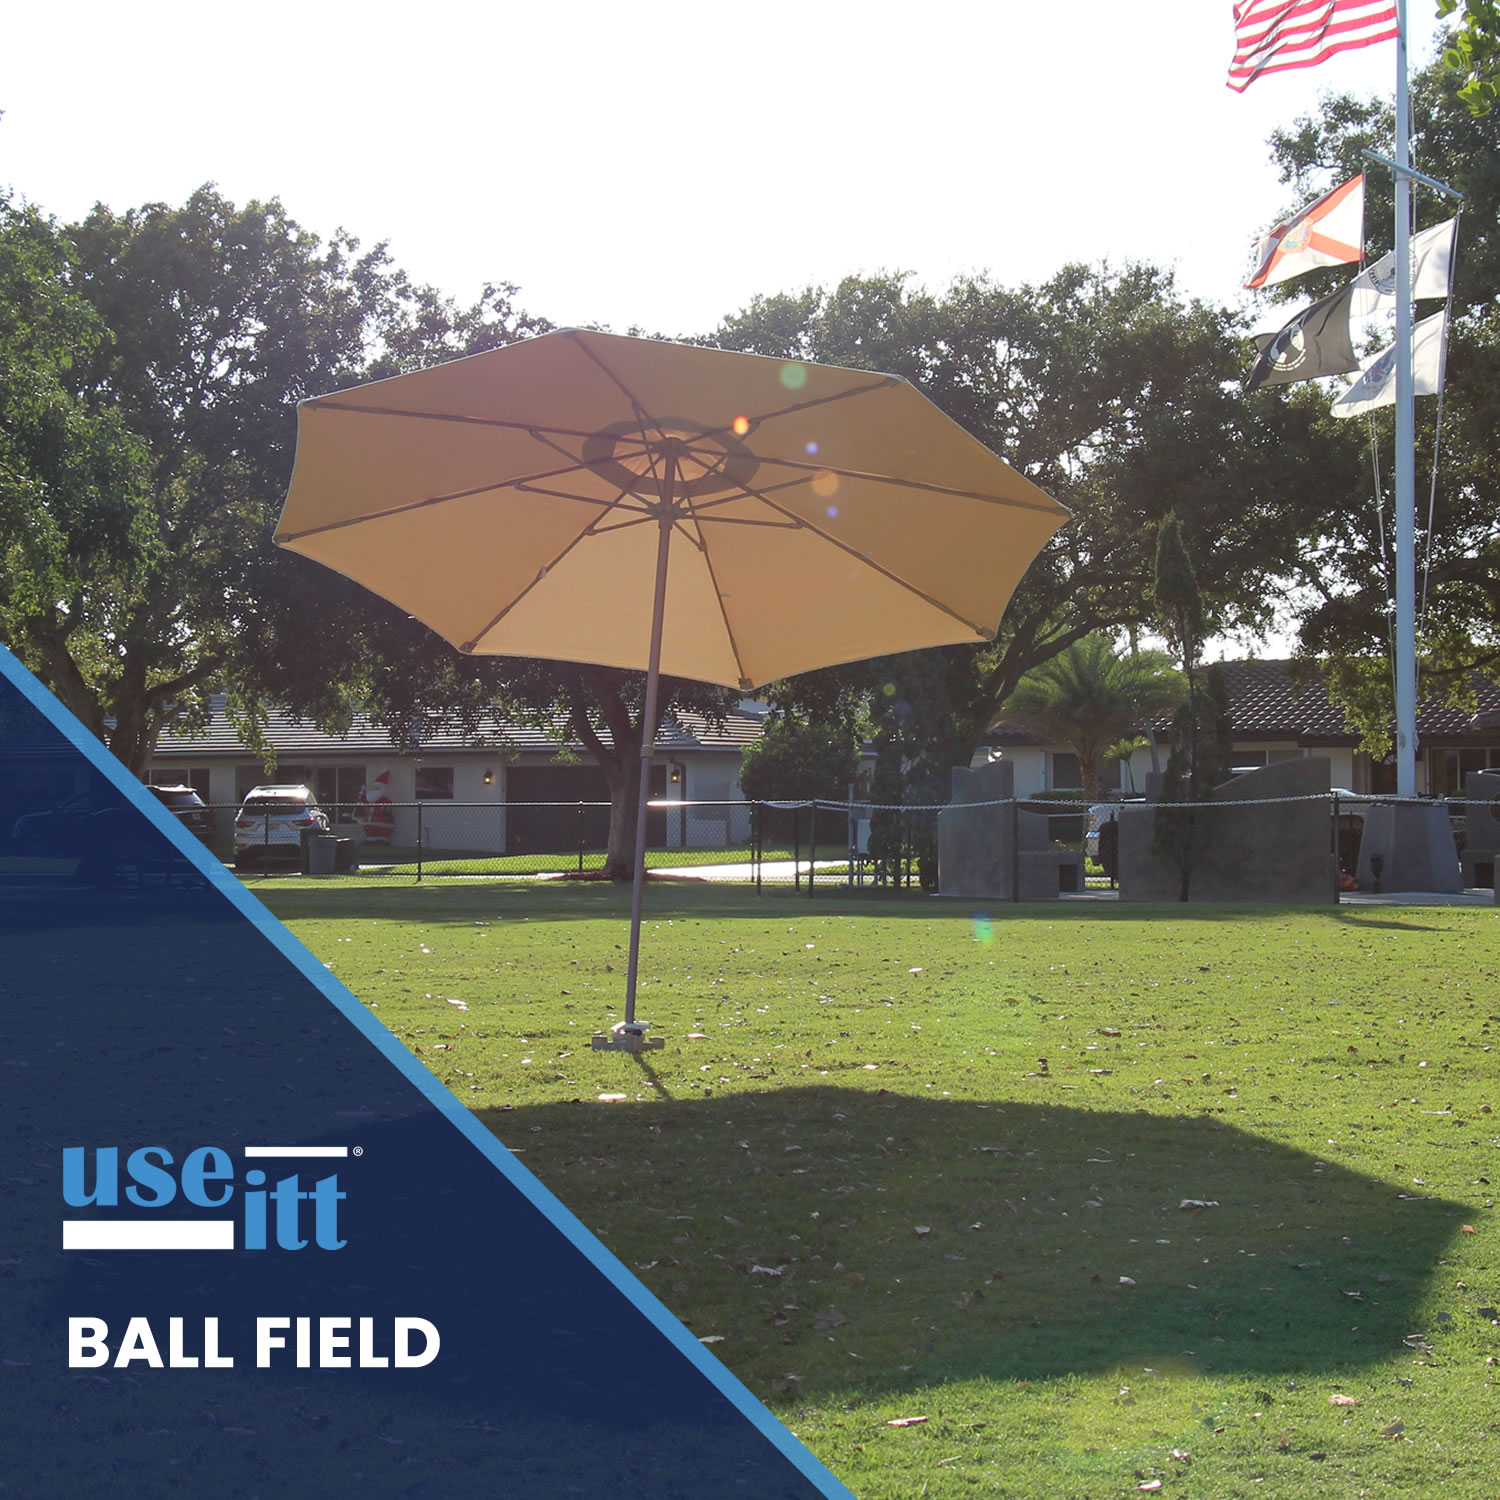 product-useitt-best-umbrella-for-ball-field-1